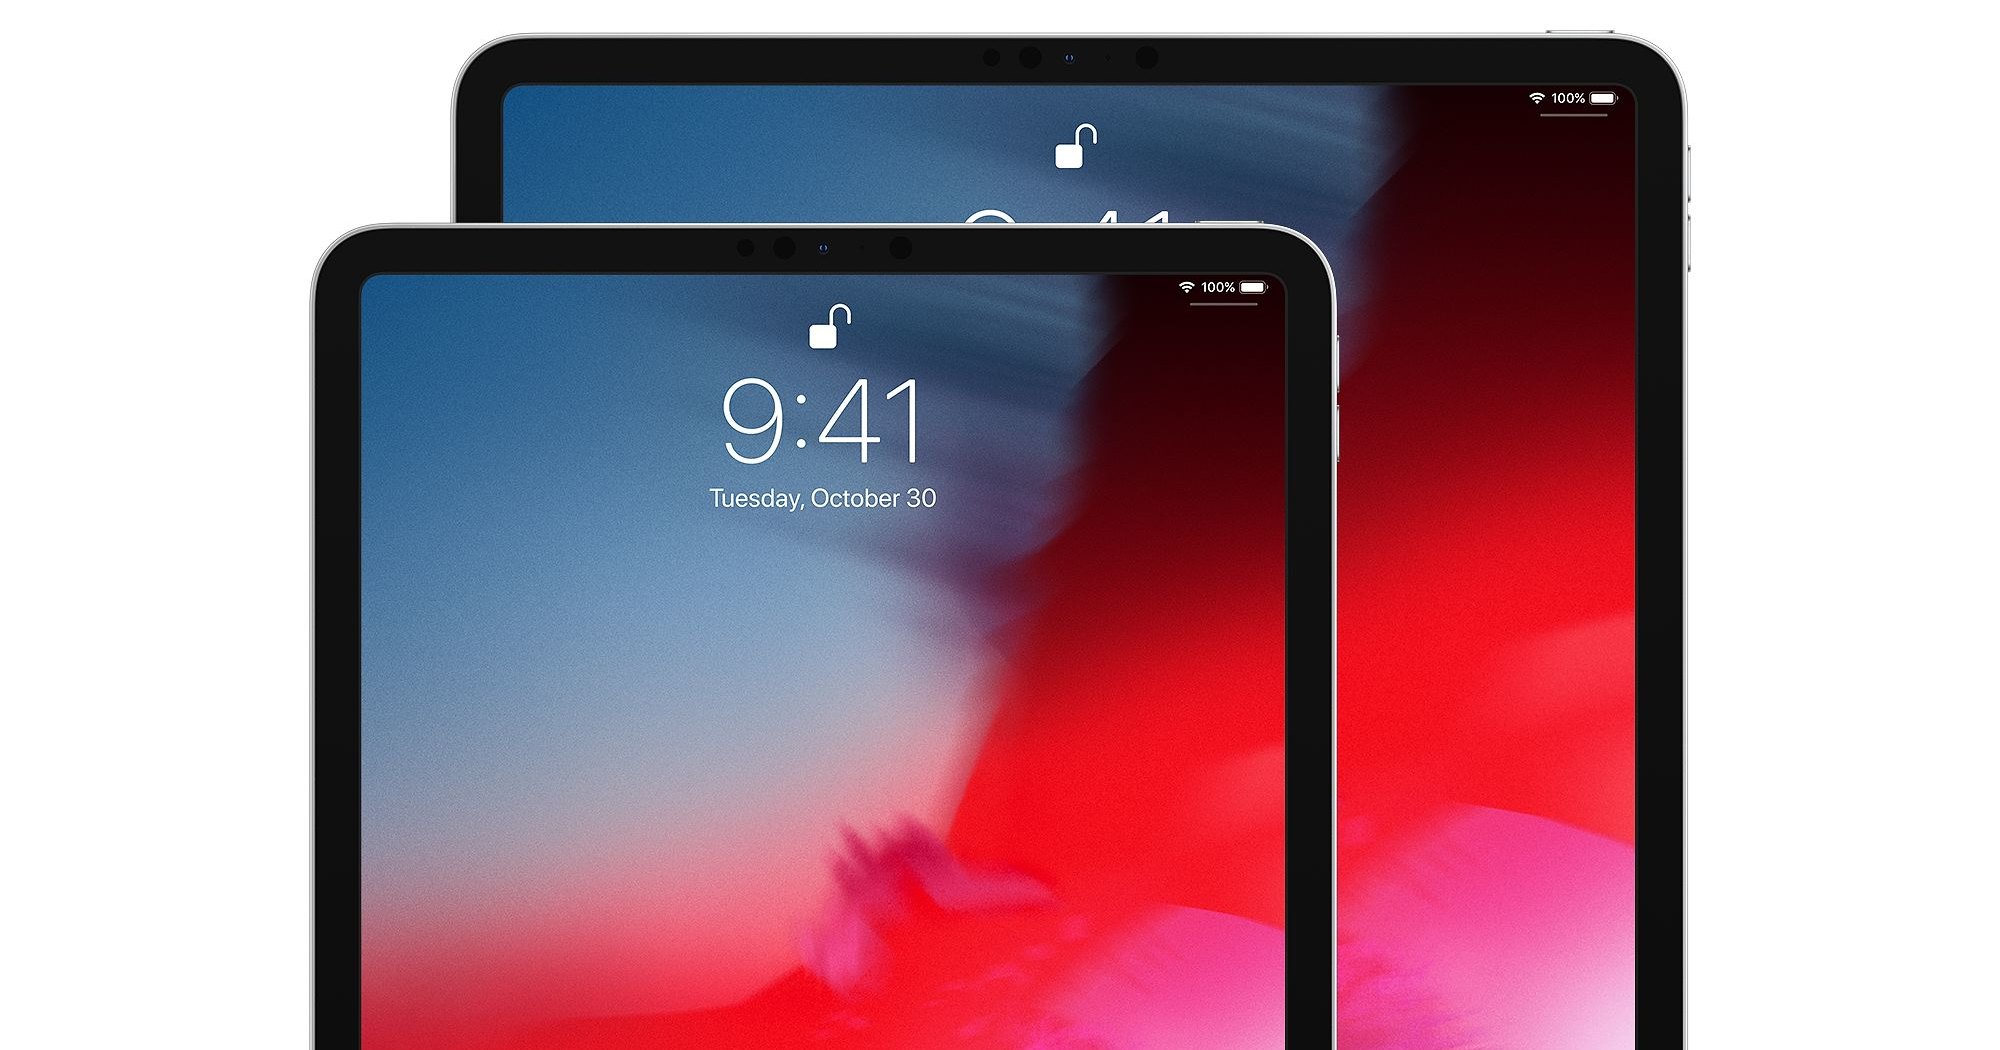 Apple презентовала новый iPad Pro